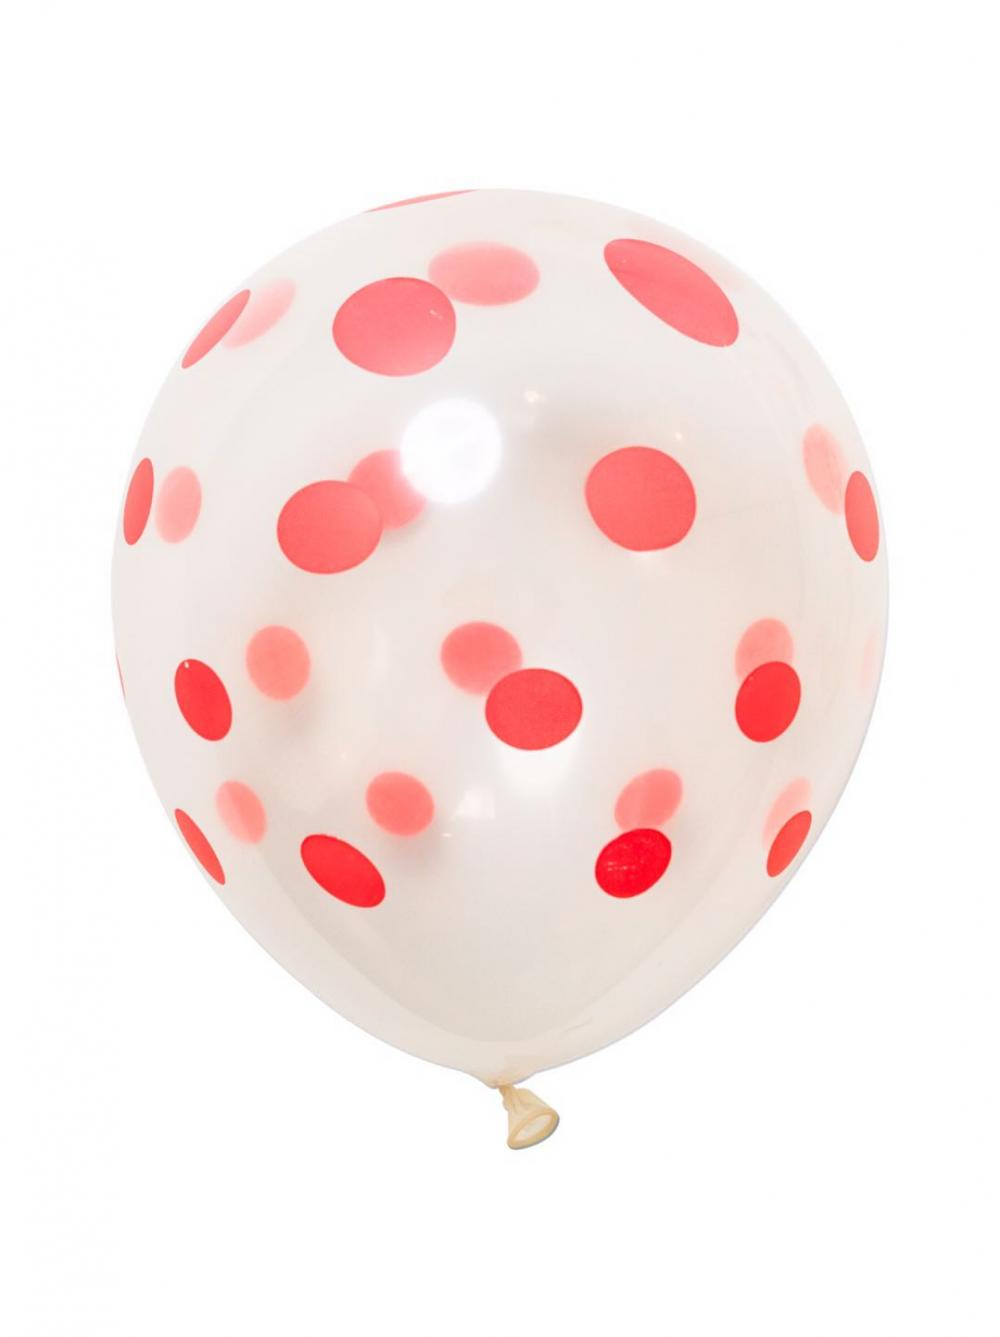 12 Inch Standard Polka Dot Balloons Clear Balloon Red Dot (100PCS)